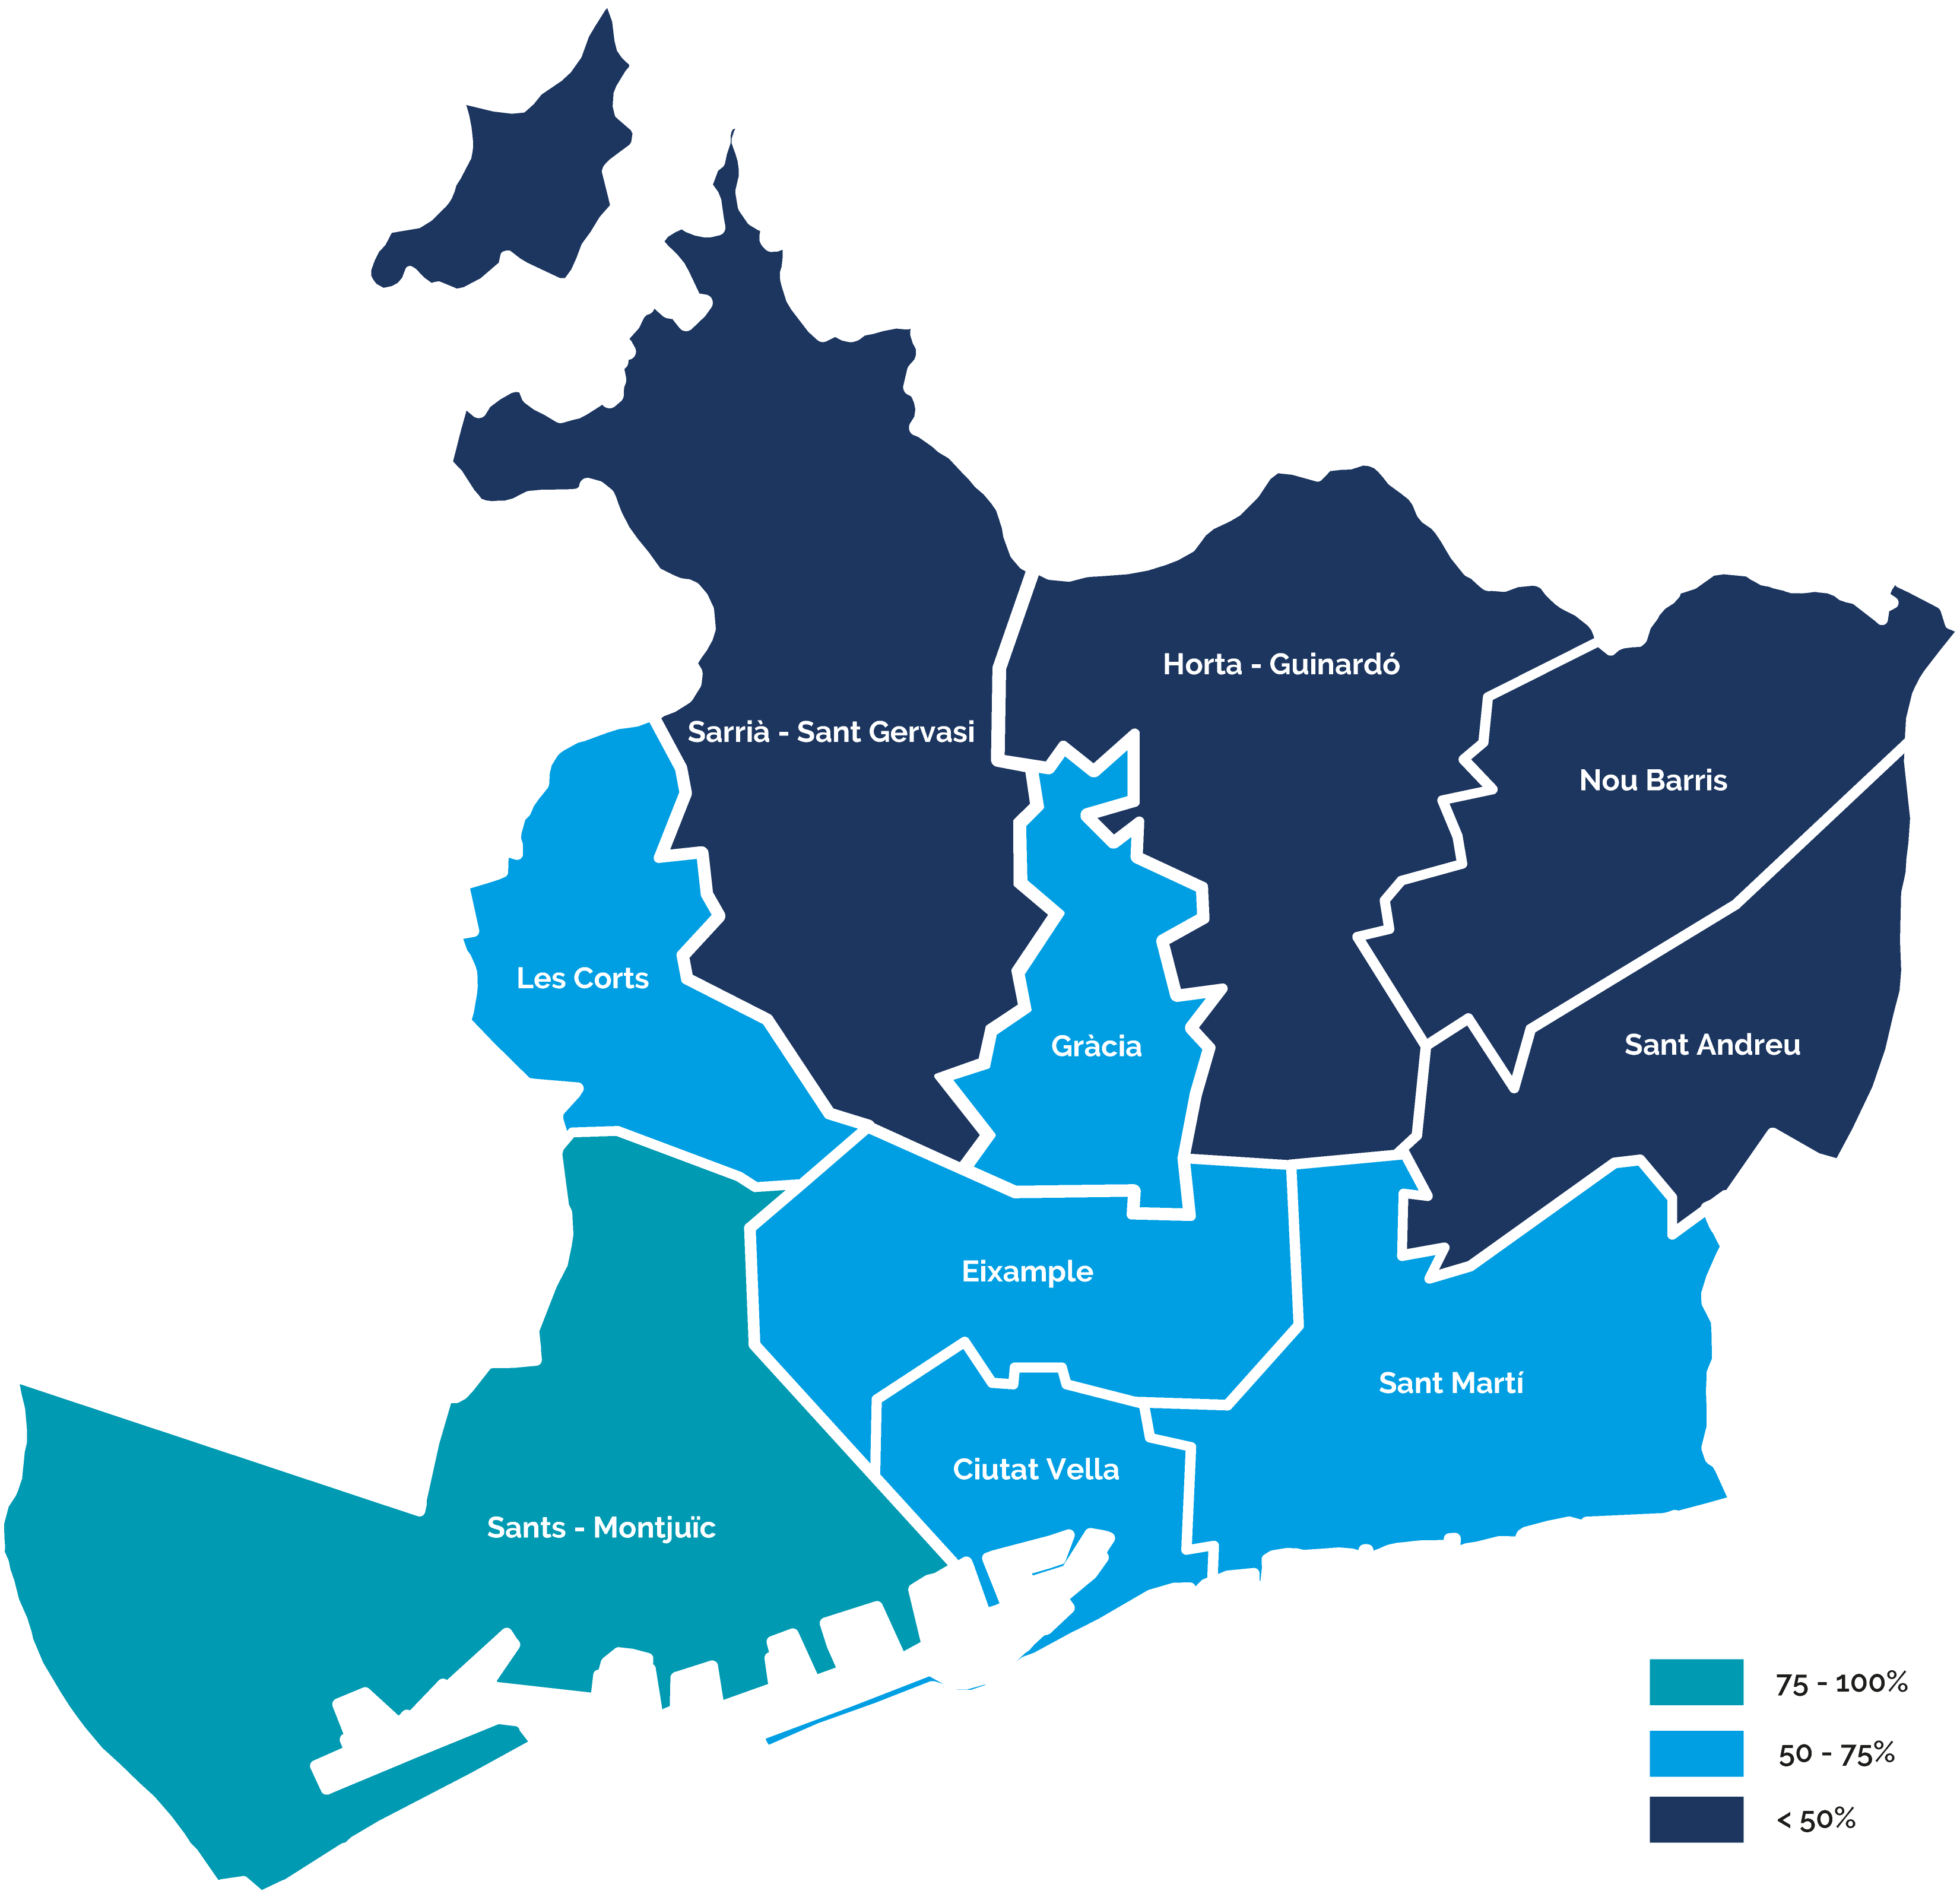 Mapa de districtes